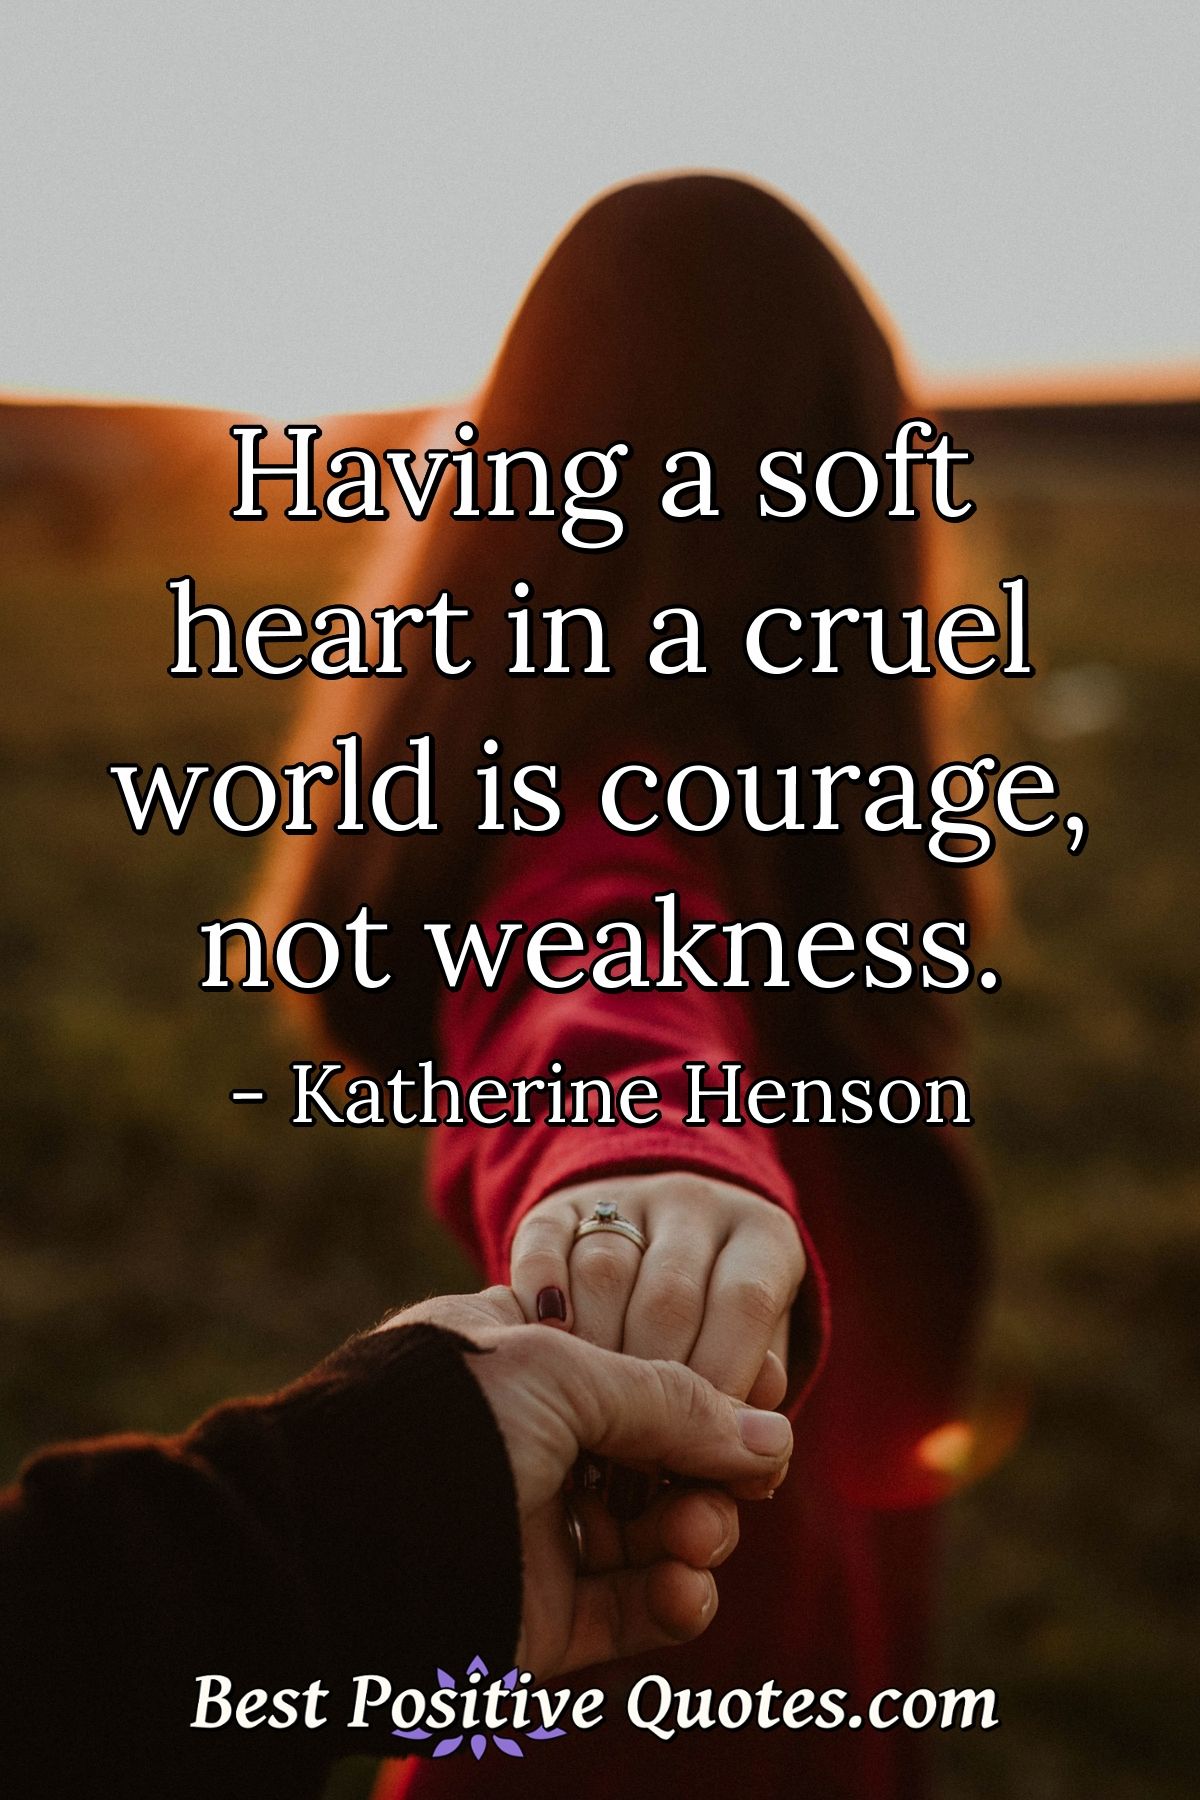 Having a soft heart in a cruel world is courage, not weakness. - Best ...